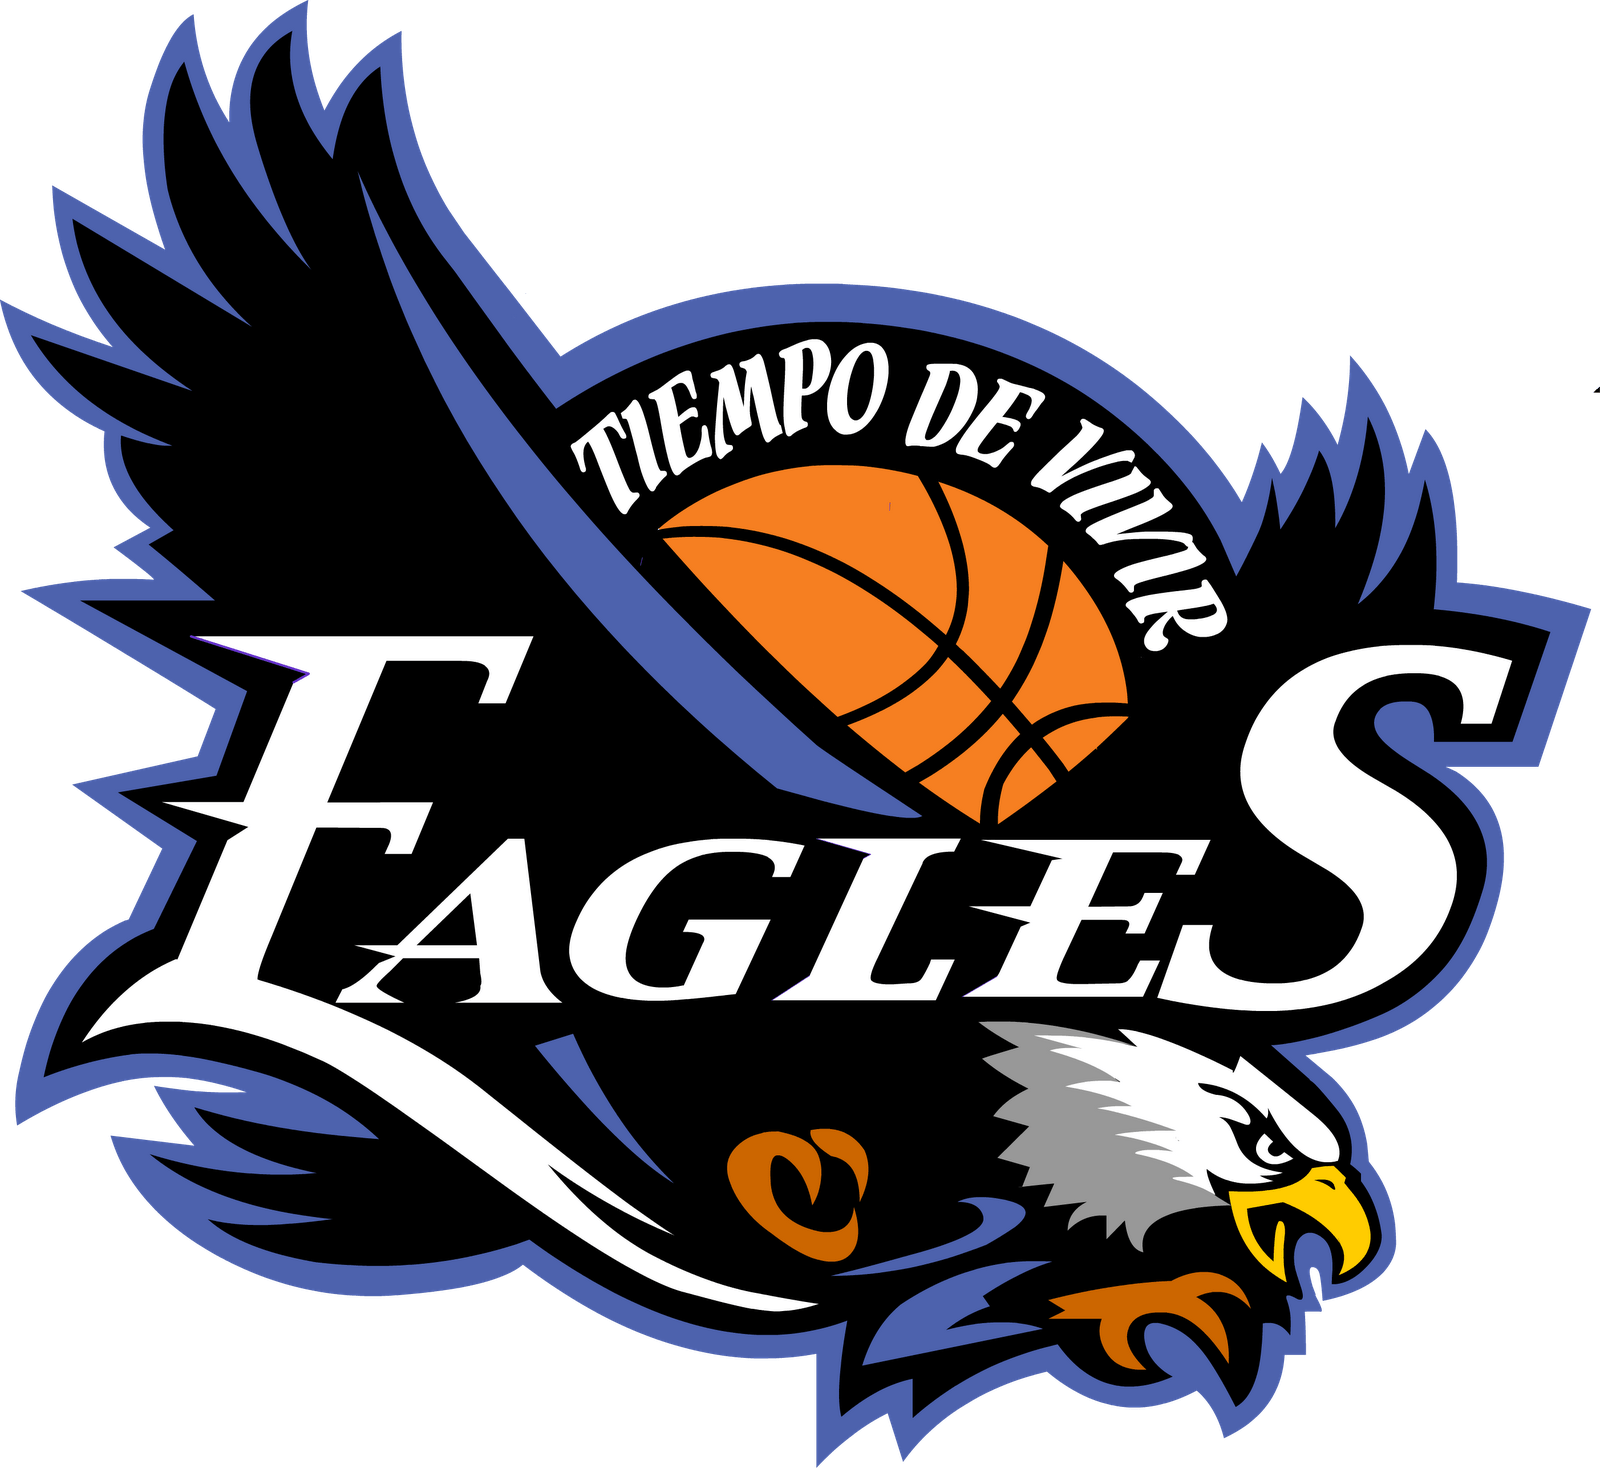 Clip Art Eagles Logo - Eagles Basketball Team Logo Clipart | Sport Logos | Logos, Team logo ...